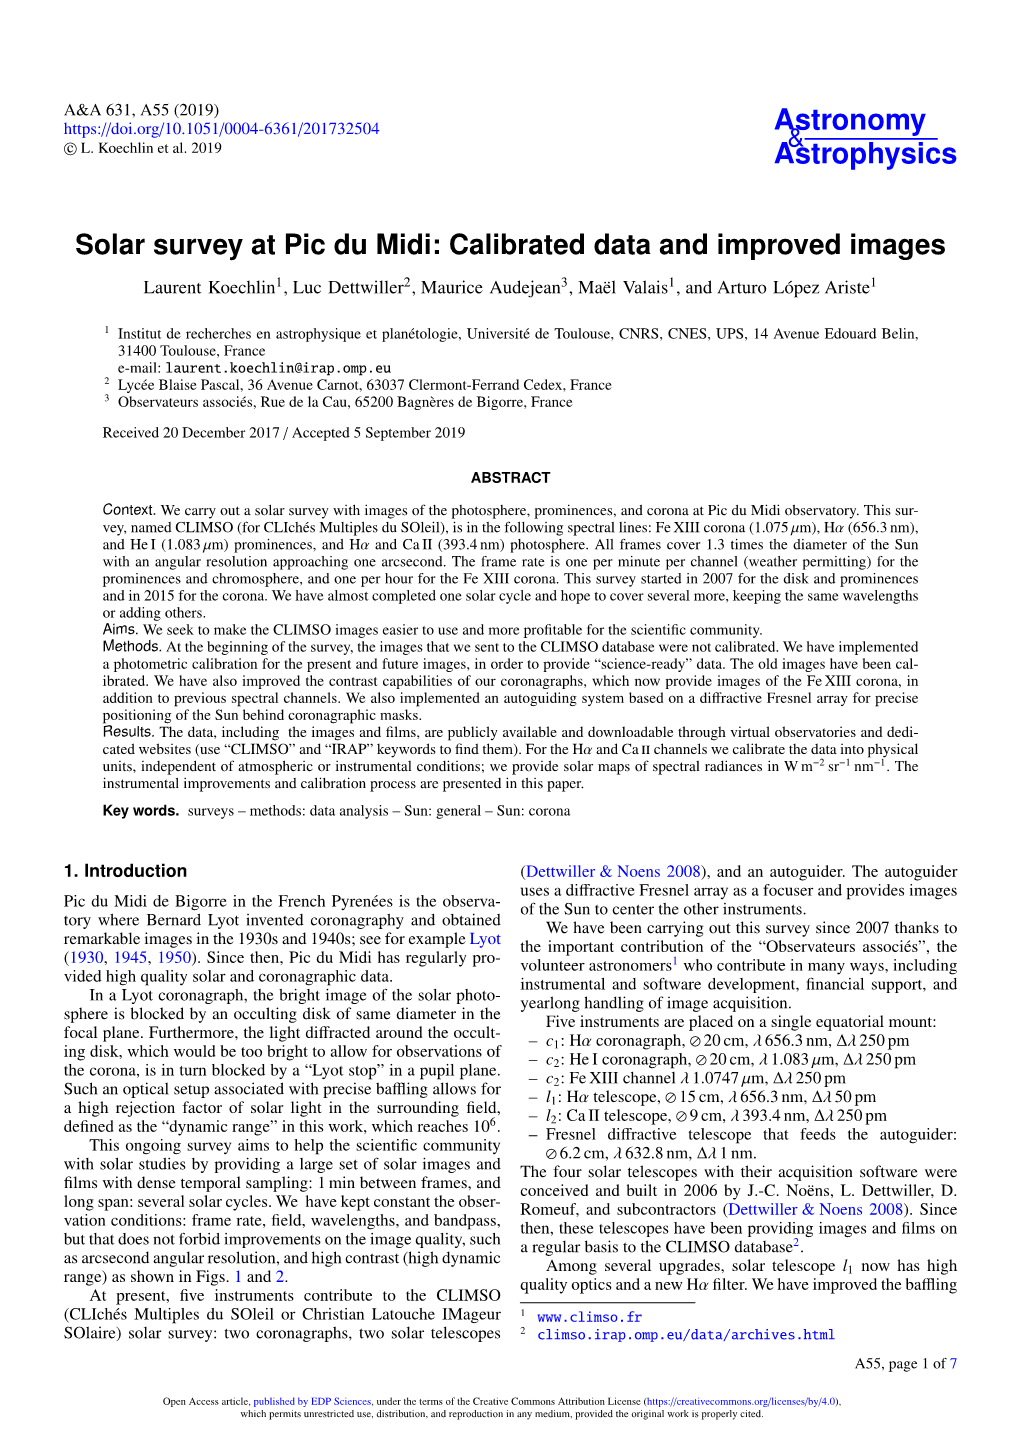 Solar Survey at Pic Du Midi: Calibrated Data and Improved Images Laurent Koechlin1, Luc Dettwiller2, Maurice Audejean3, Maël Valais1, and Arturo López Ariste1